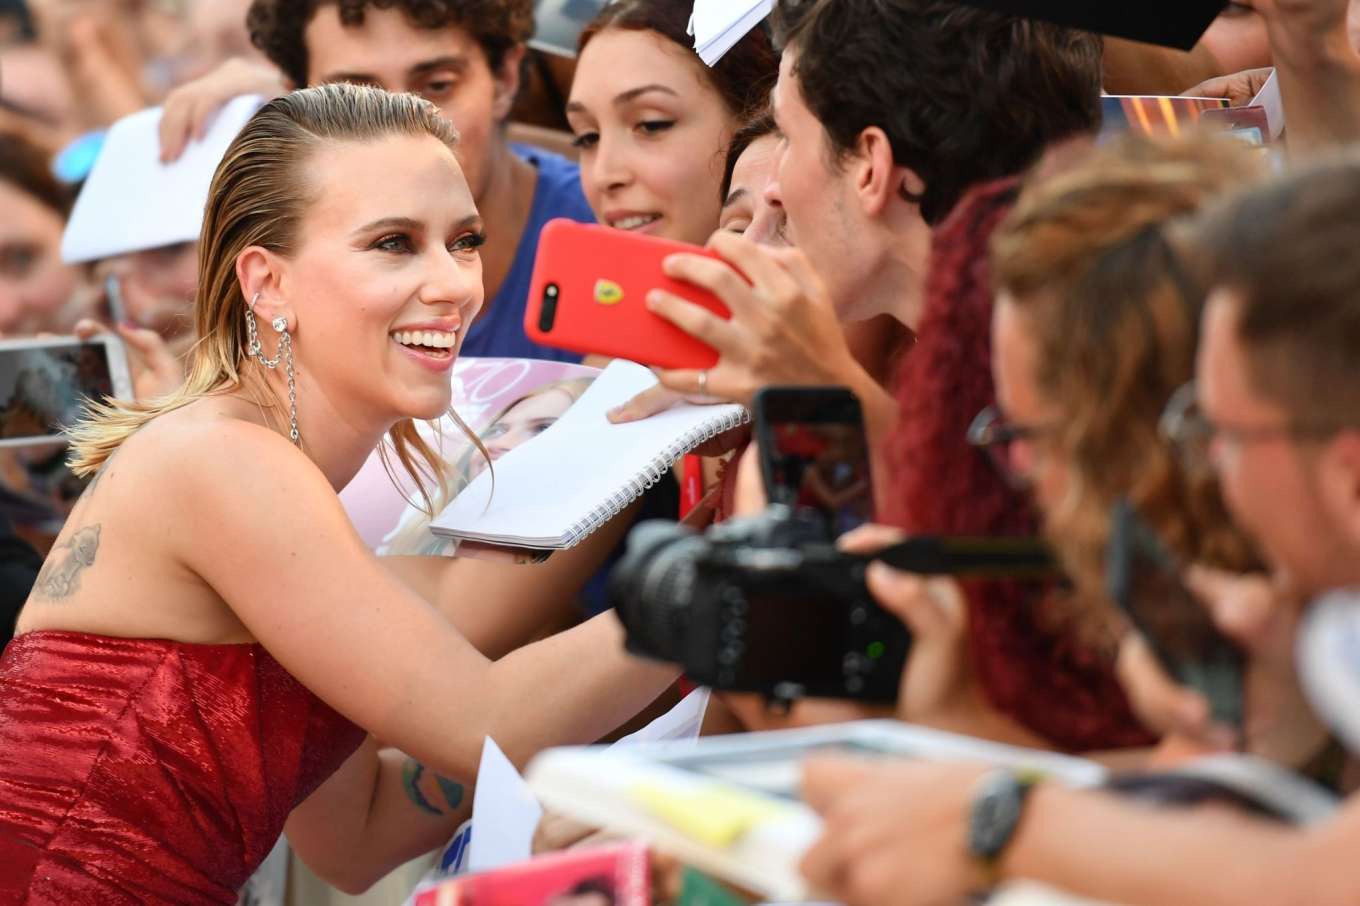 Scarlett Johansson â€“ In red dress at â€˜Marriage Storyâ€™ Screening at 2019 Venice Film Festival (adds)